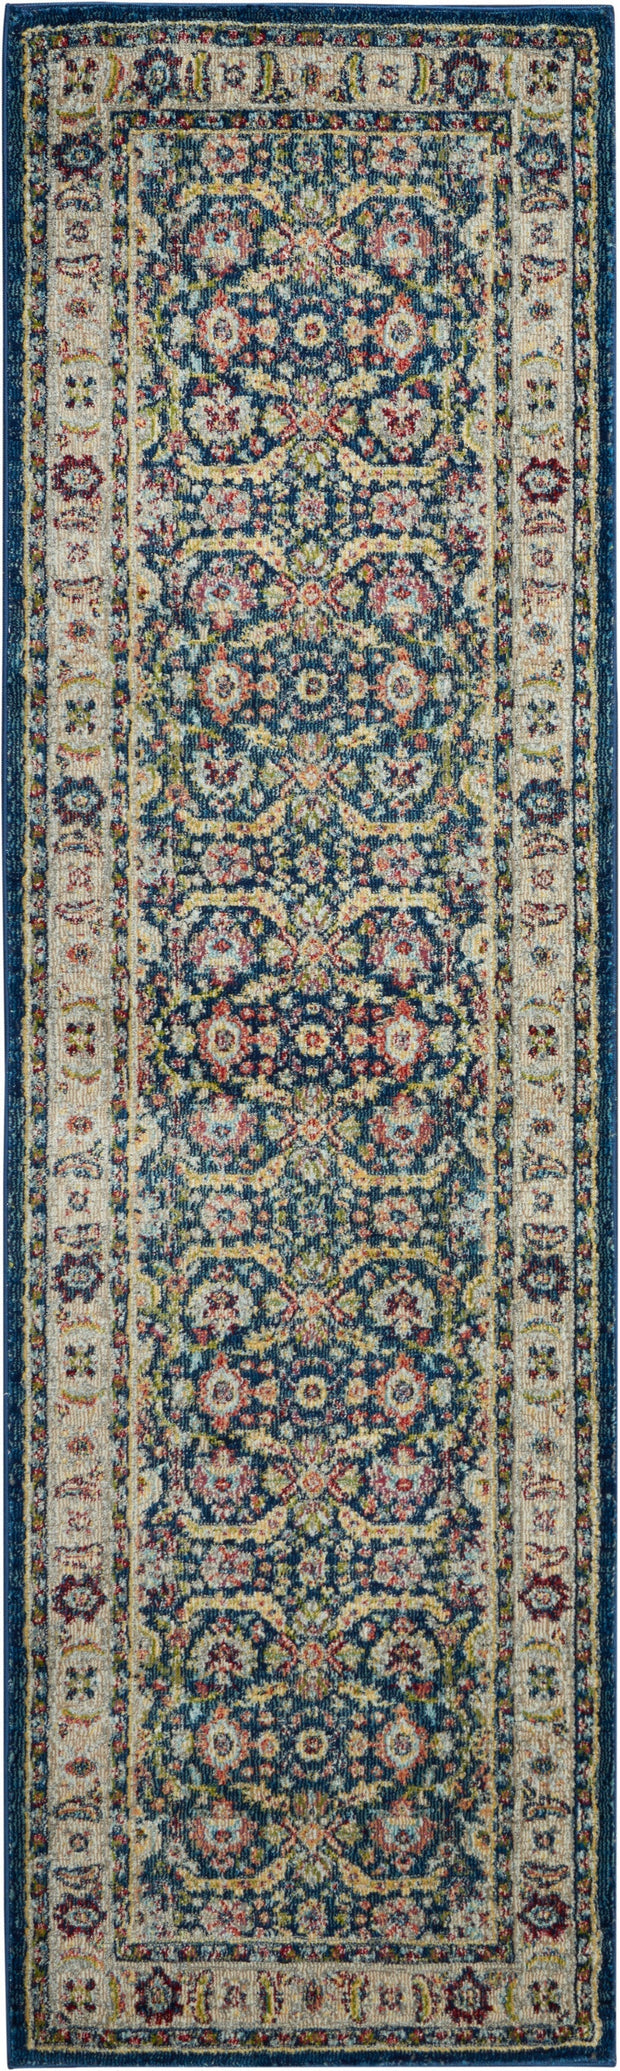 ankara global navy multicolor rug by nourison 99446498250 redo 3